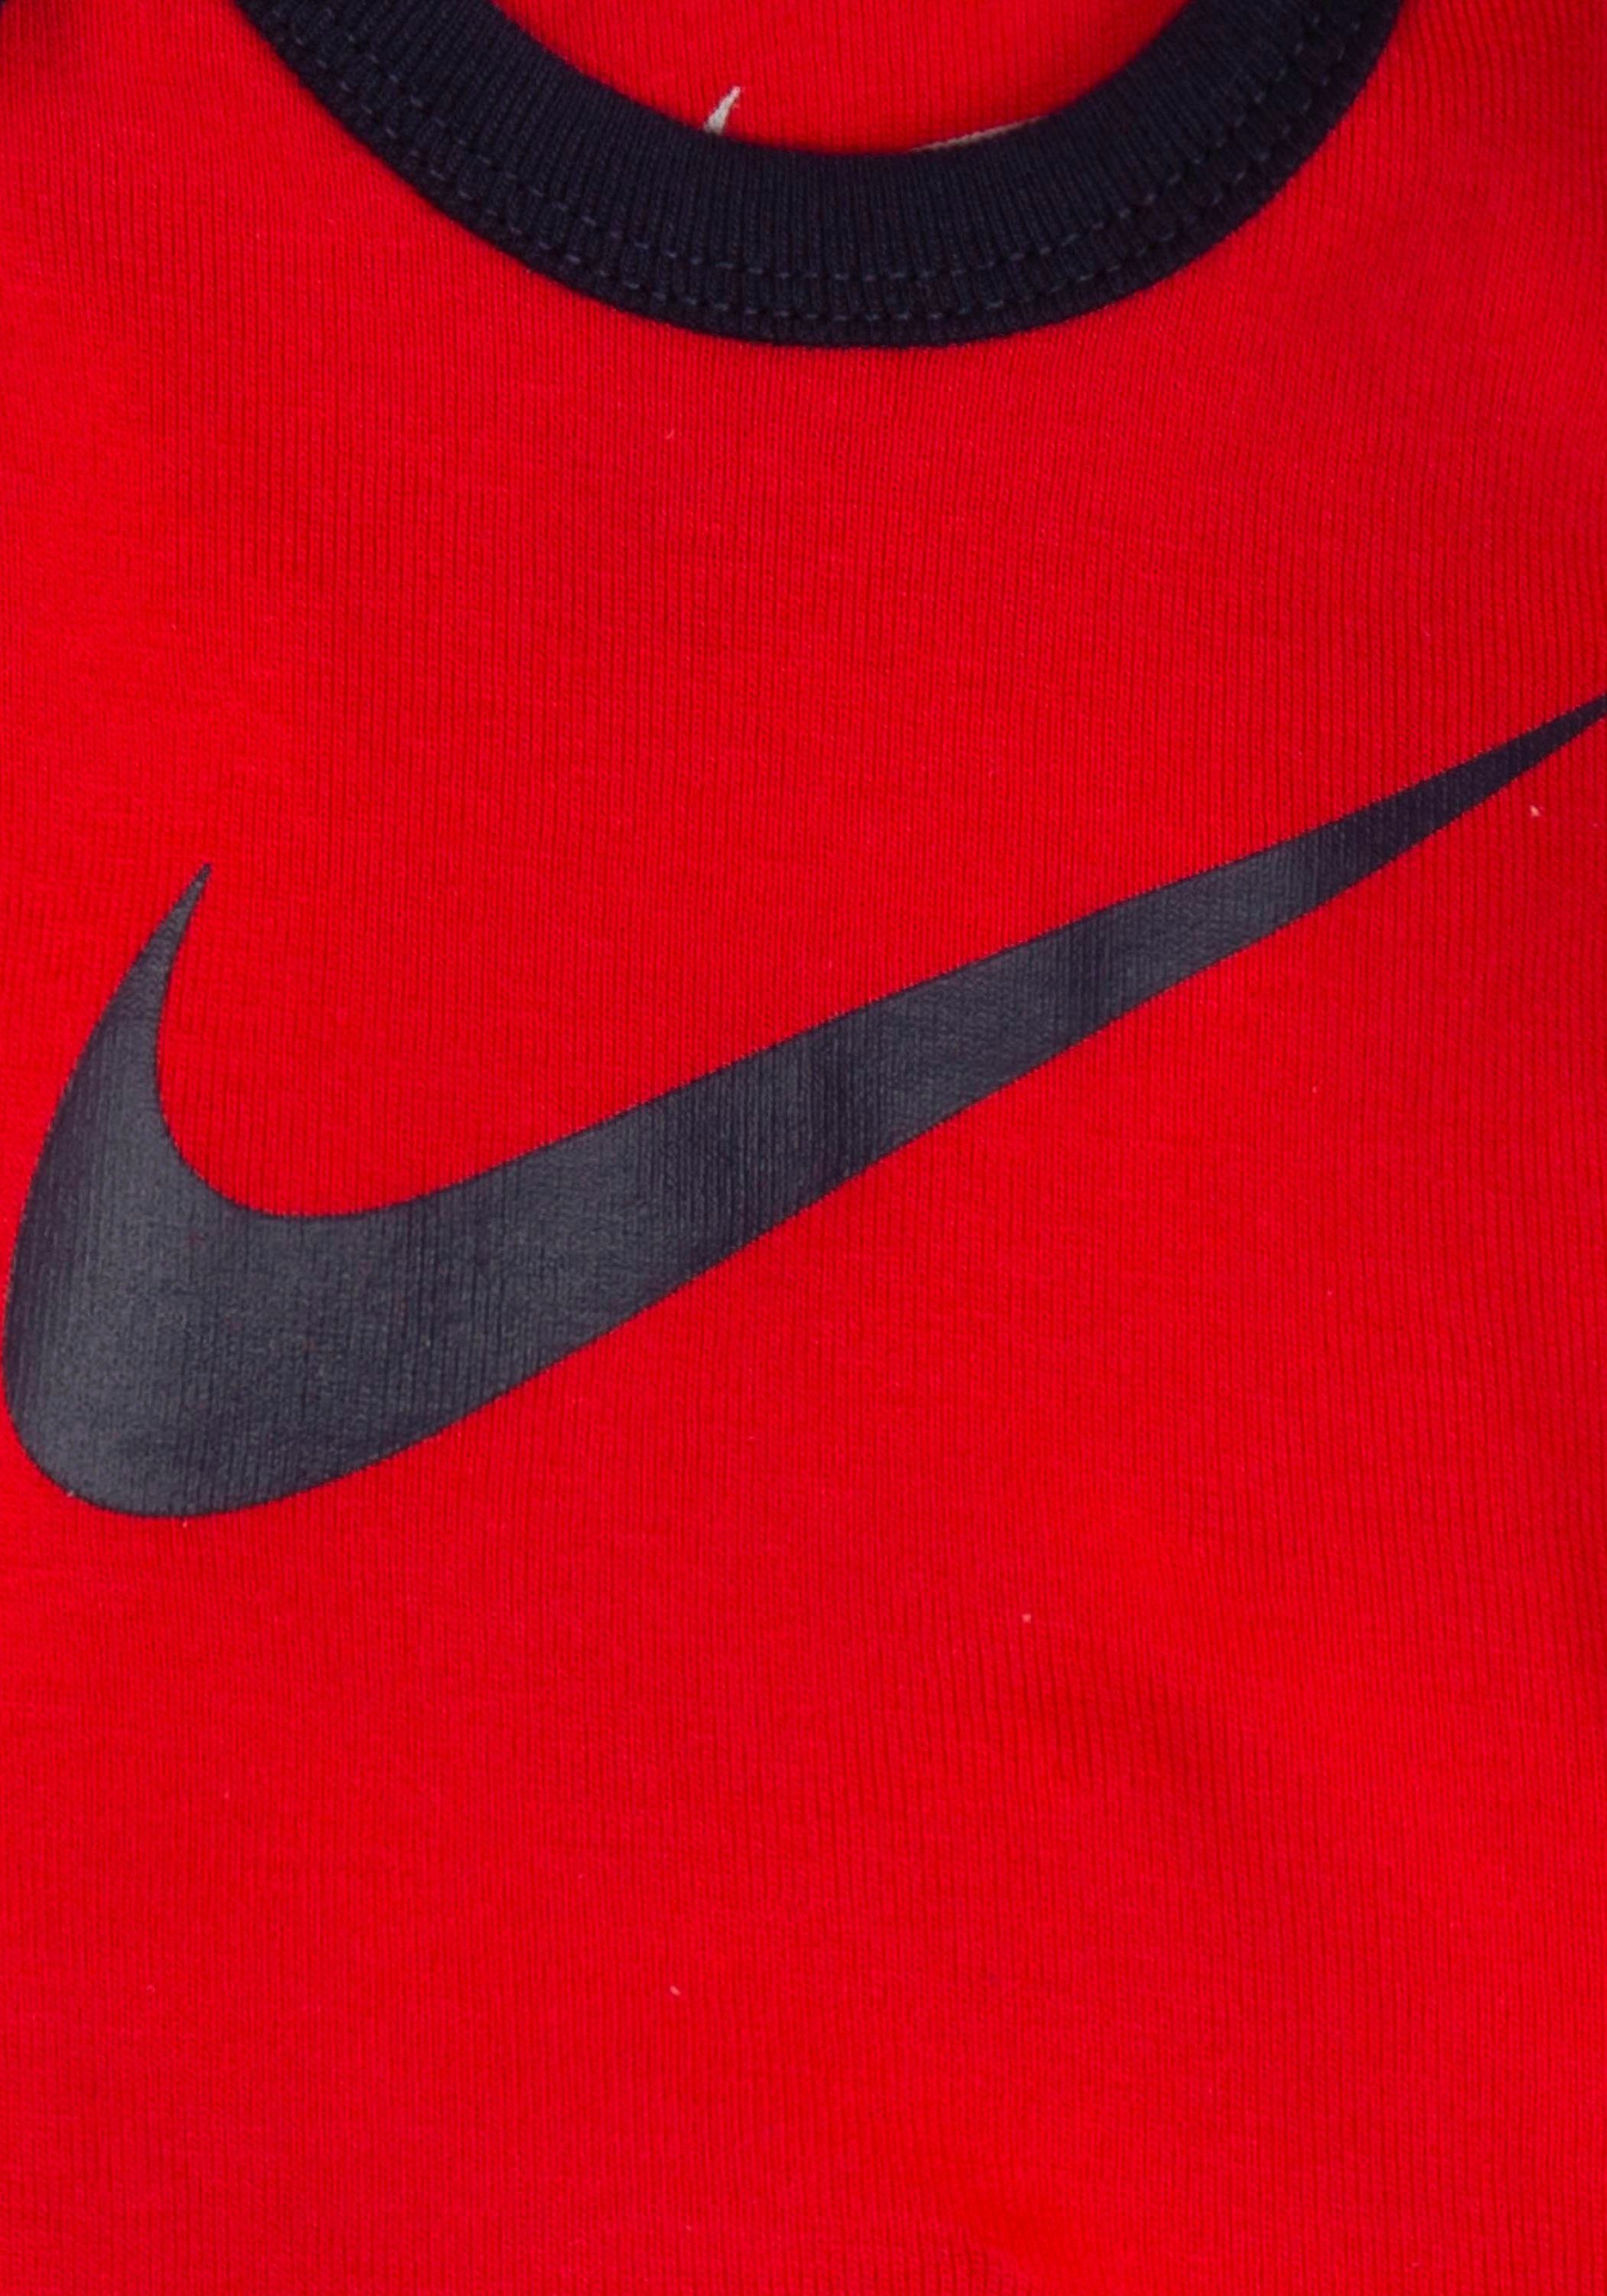 (Set, Sportswear Erstausstattungspaket Neugeborenen-Geschenkset rot 3-tlg) Nike